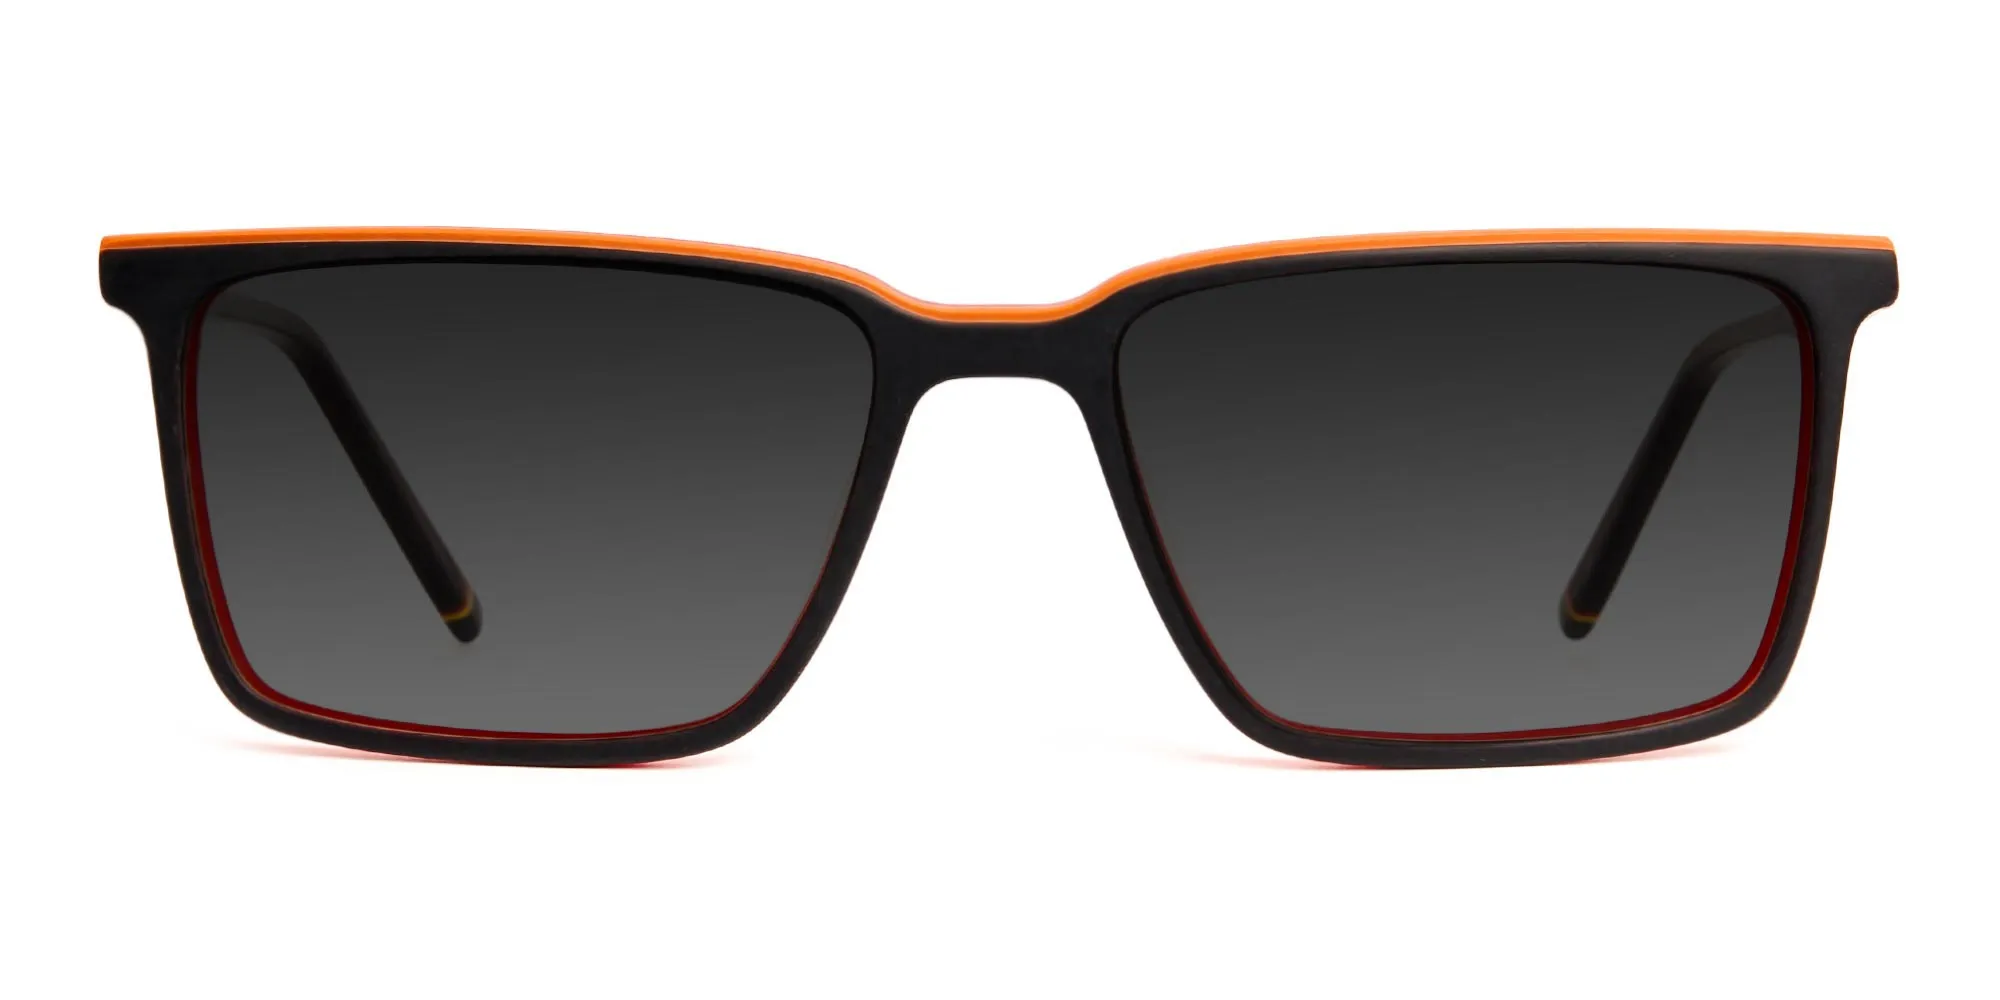 black-and-orange-rectangular-full-rim-grey-tinted-sunglasses-frames-2